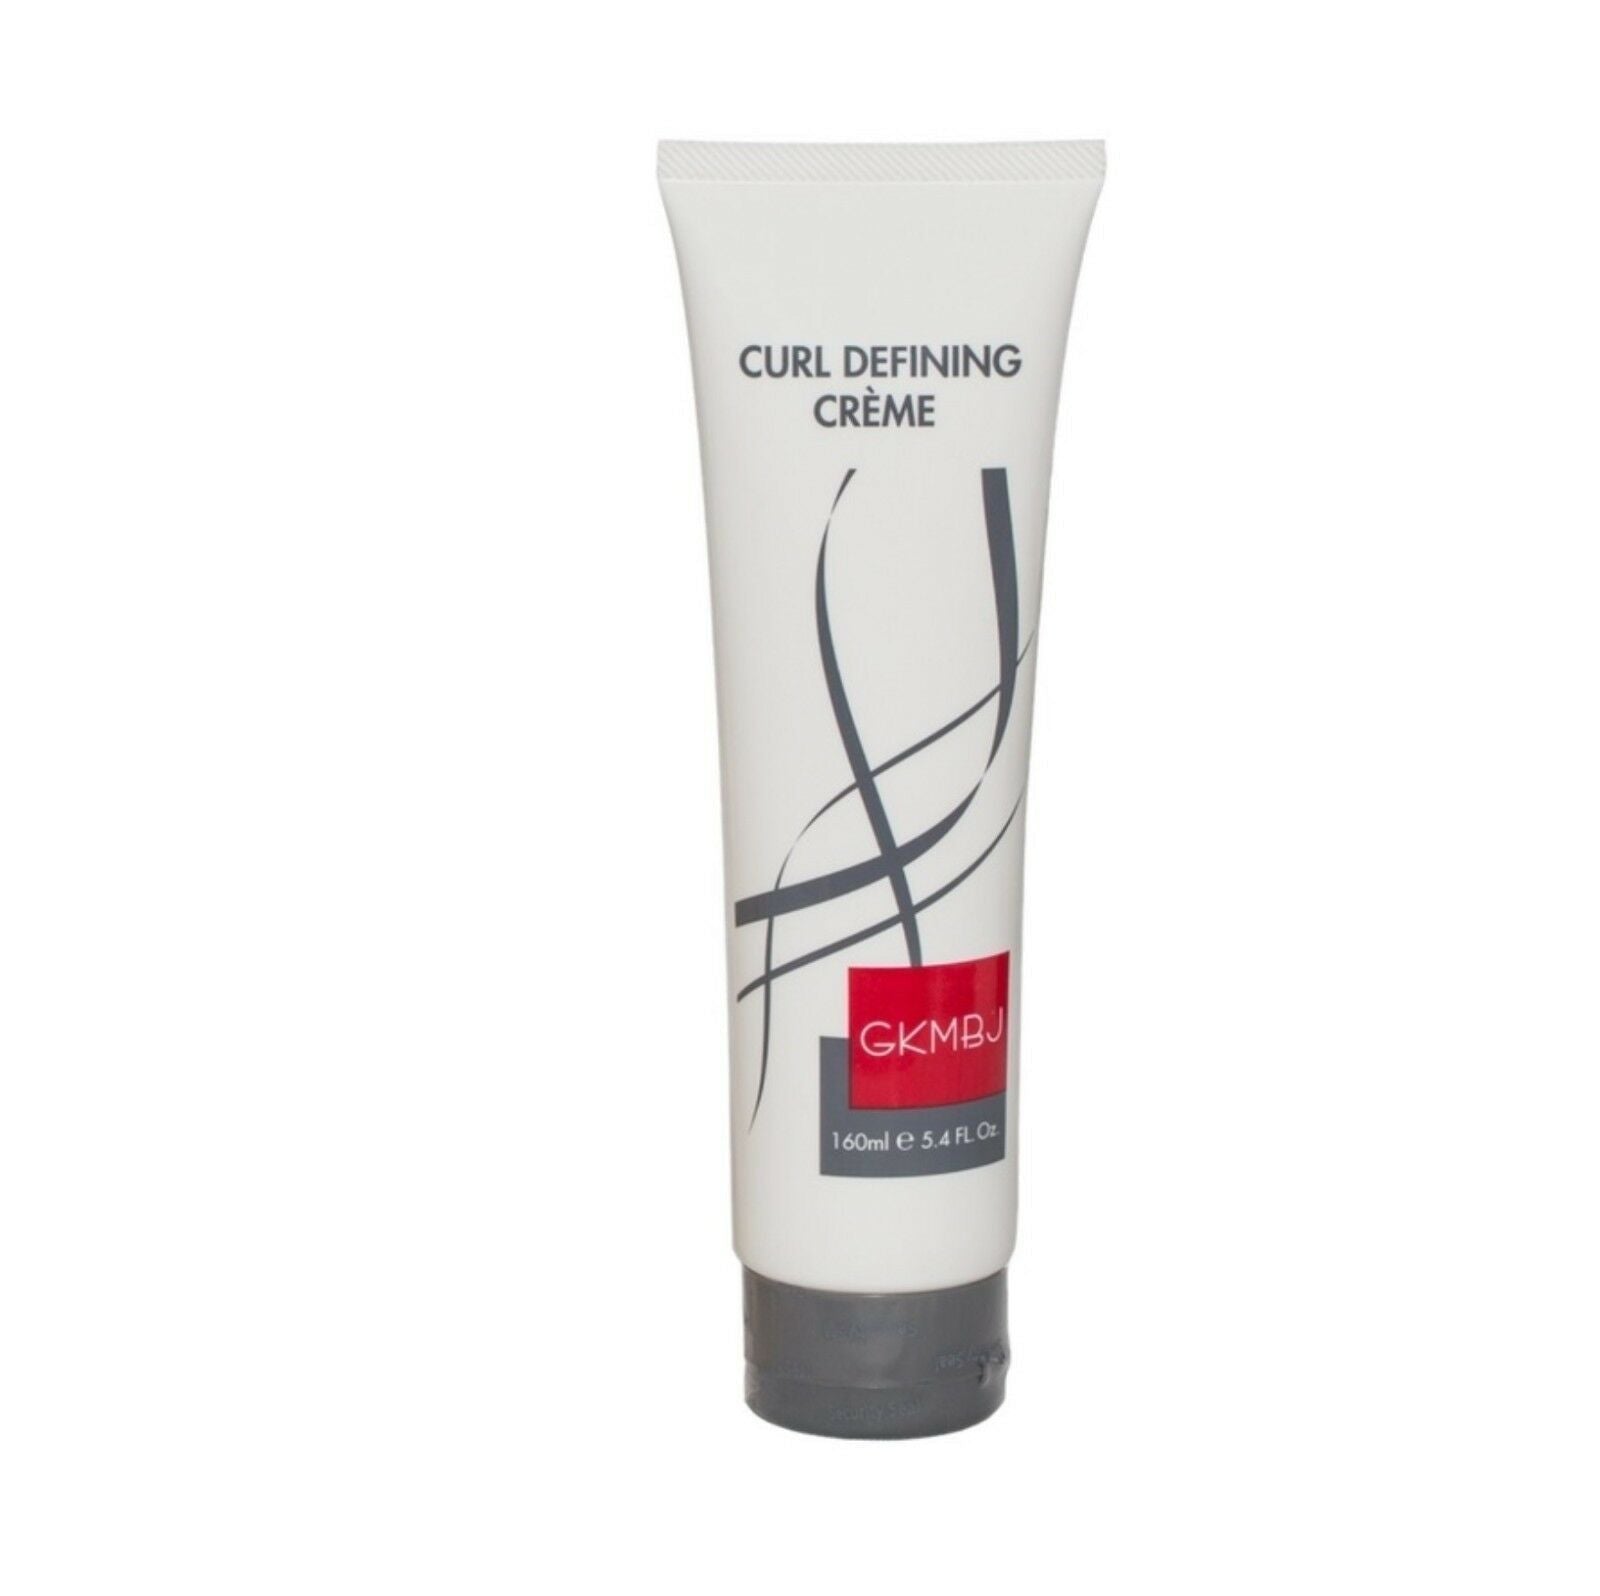 GKMBJ Curl Defining Creme 160g Deep Penetration - Enhance Curls x 2 - On Line Hair Depot